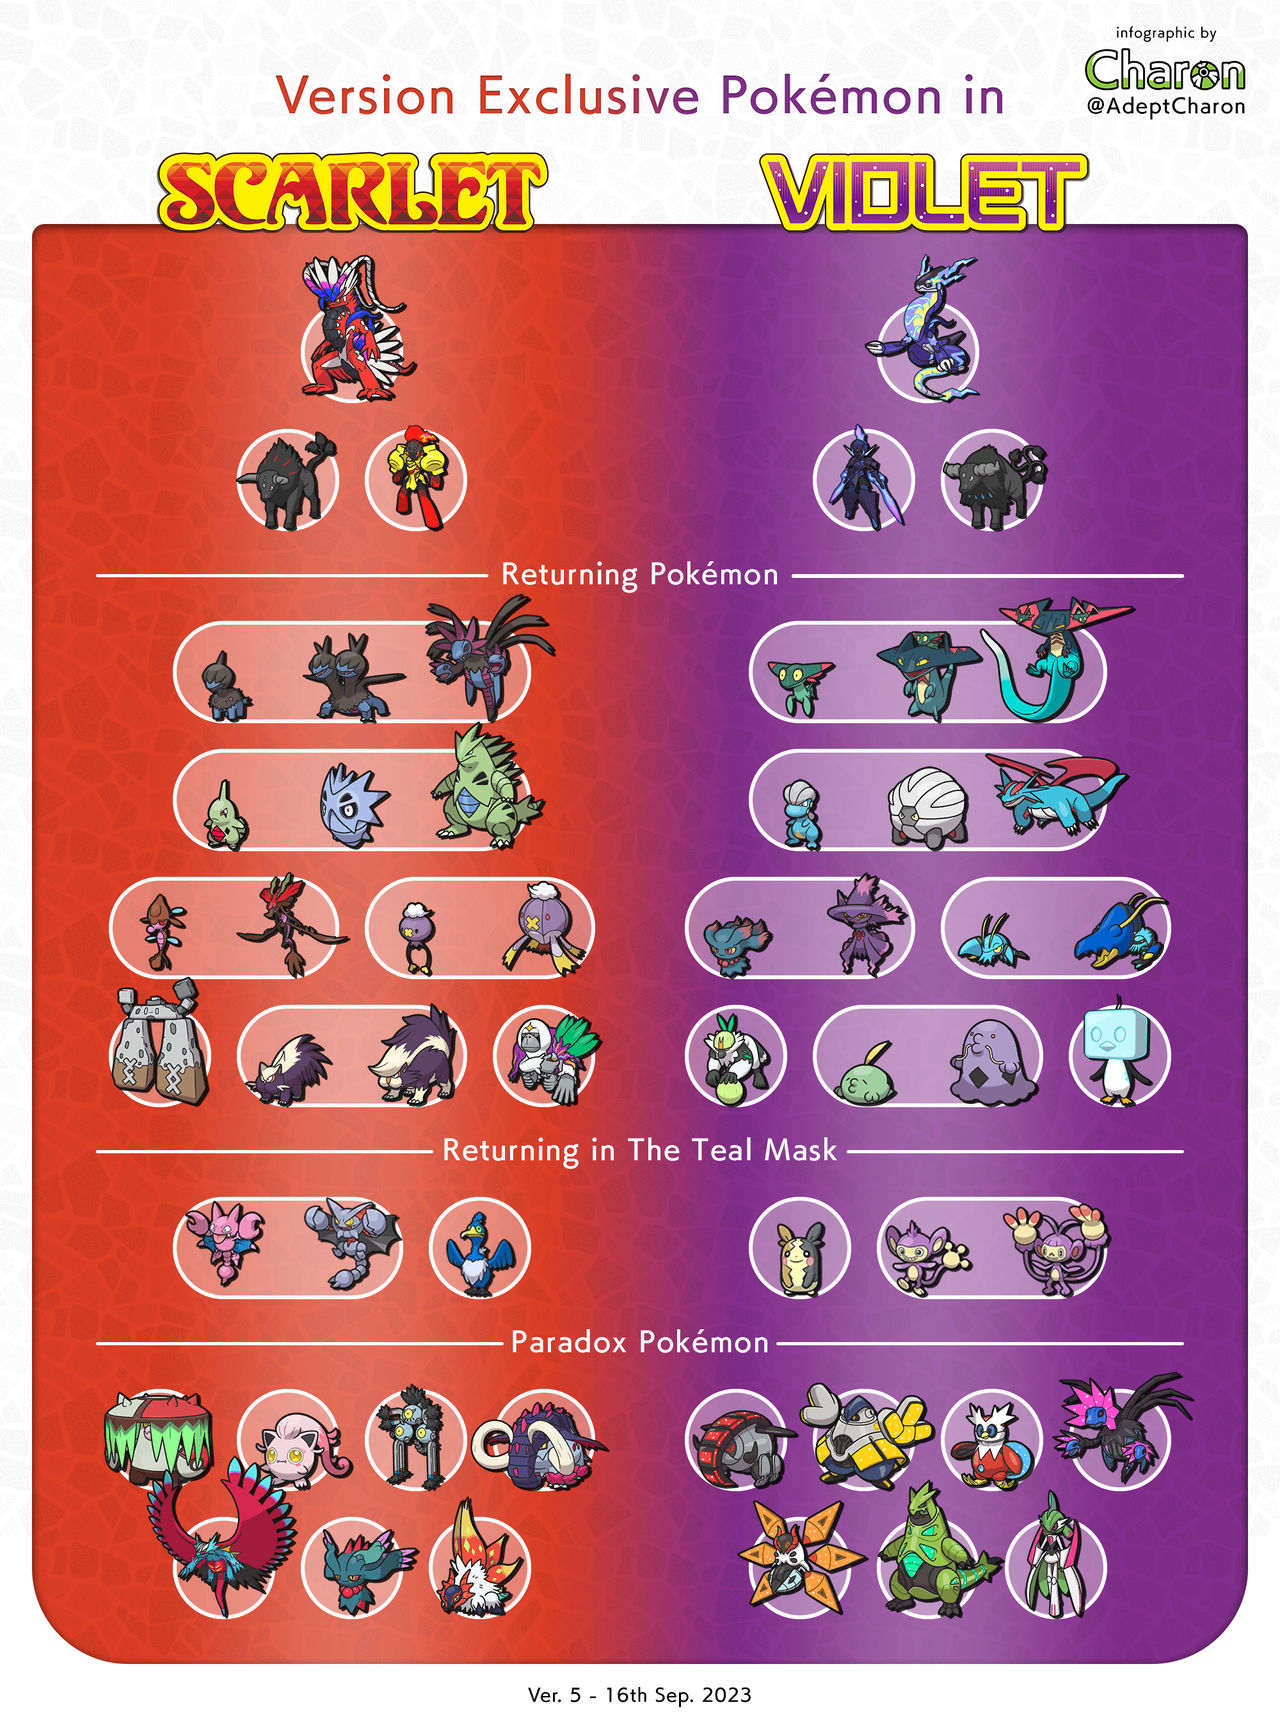 All version exclusive Pokémon in Pokémon Scarlet & Violet 